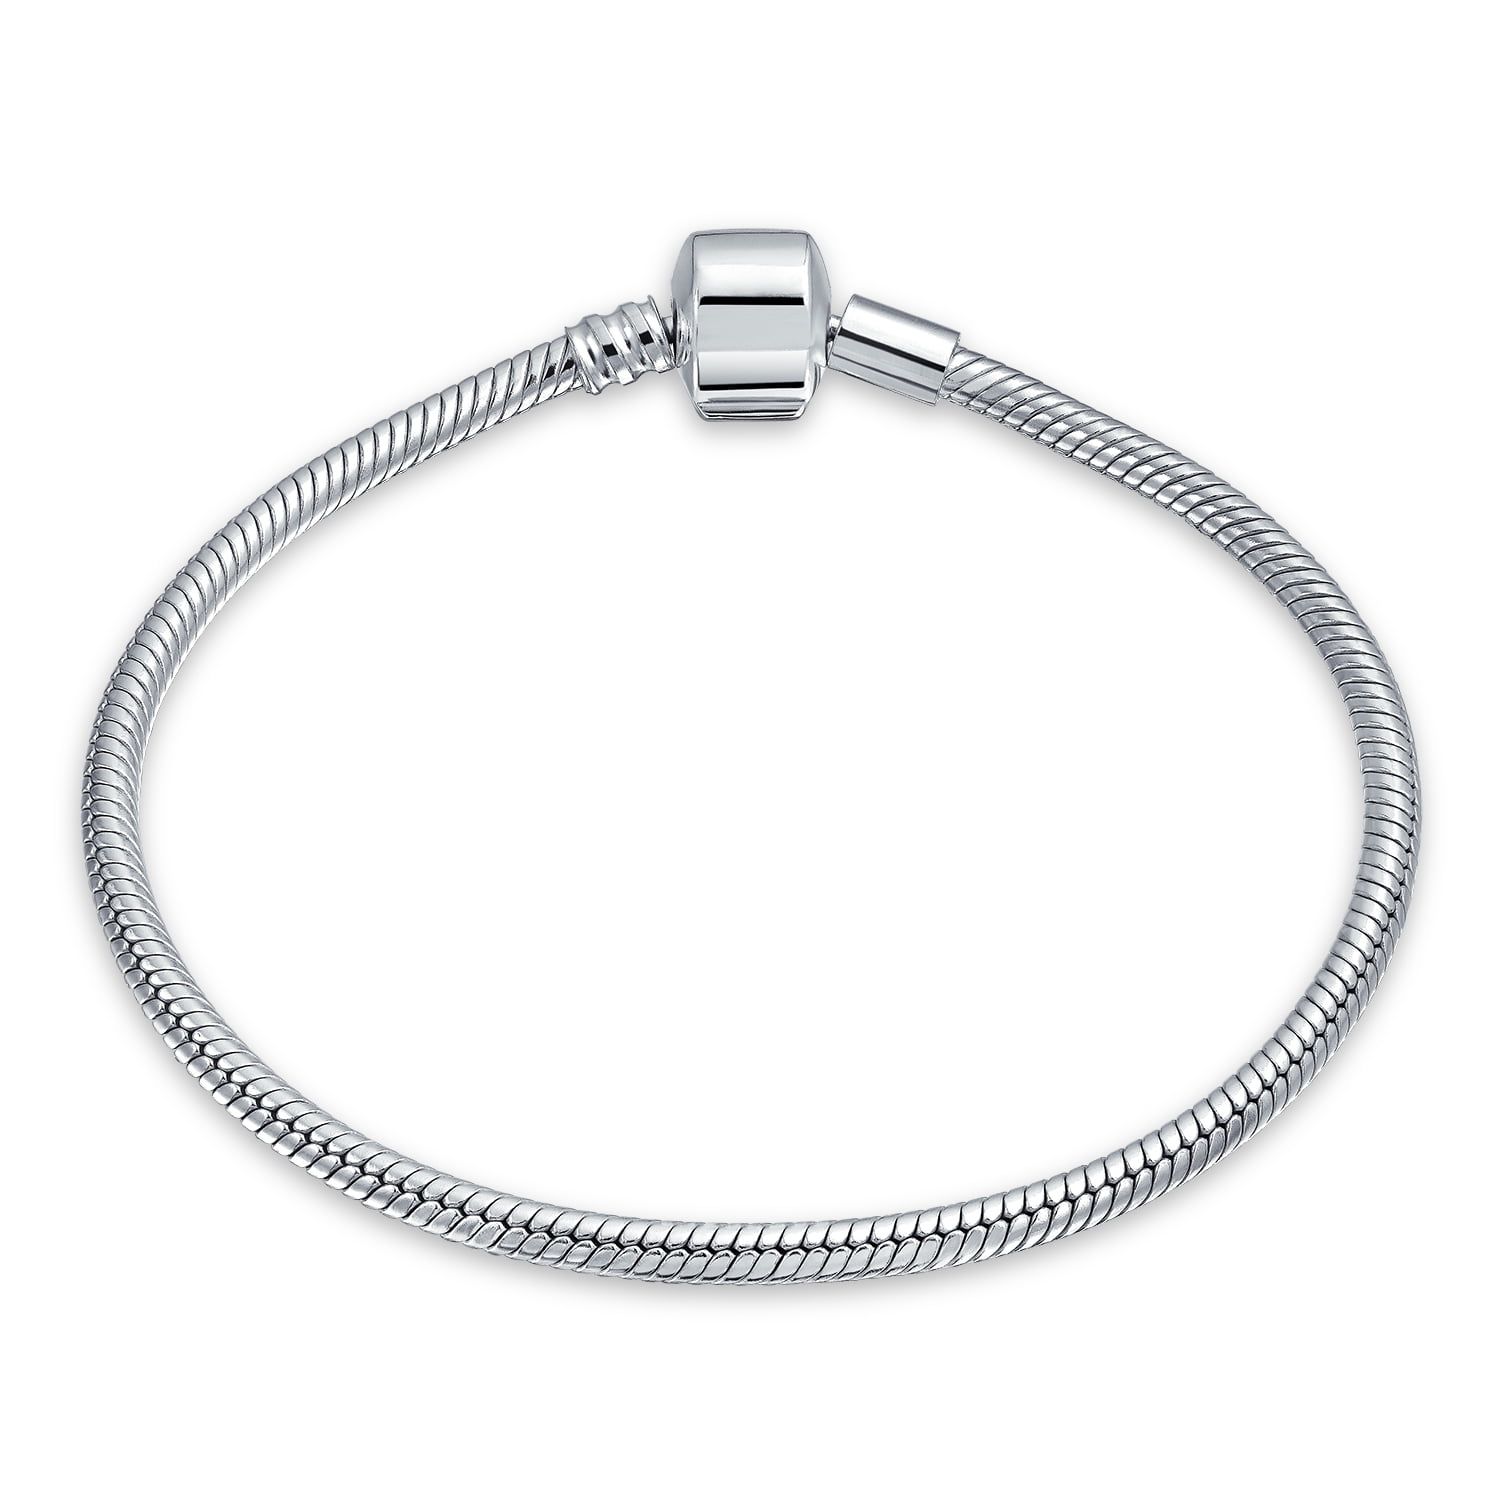 10 Pc Lot/Set 925 Sterling Silver Snake Link Chain Women's Bracelet Bangle D403